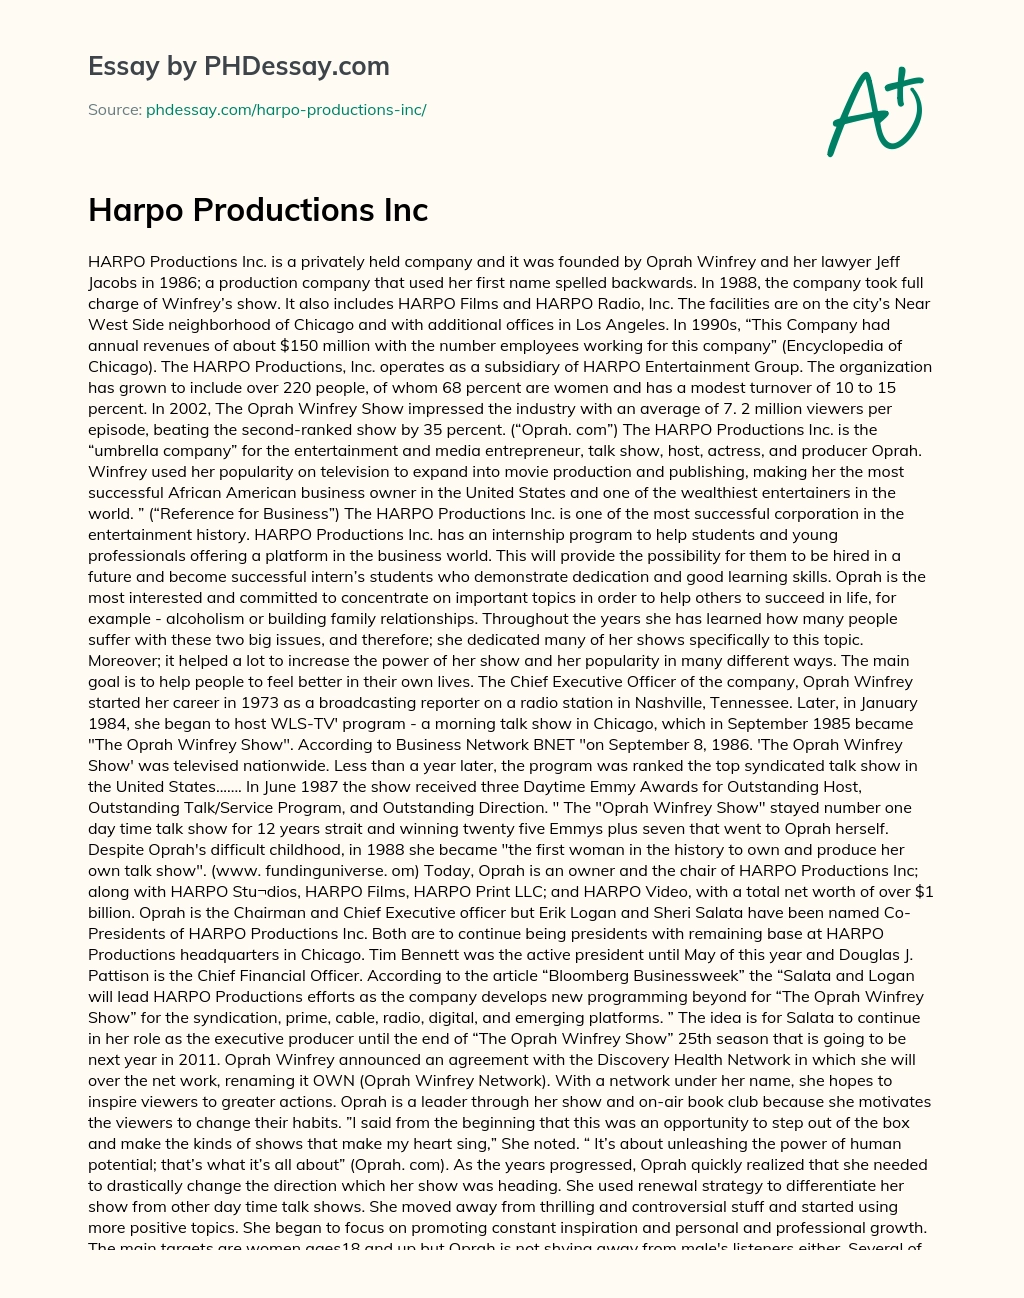 HARPO Productions Inc.: Oprah Winfrey’s Media Empire essay